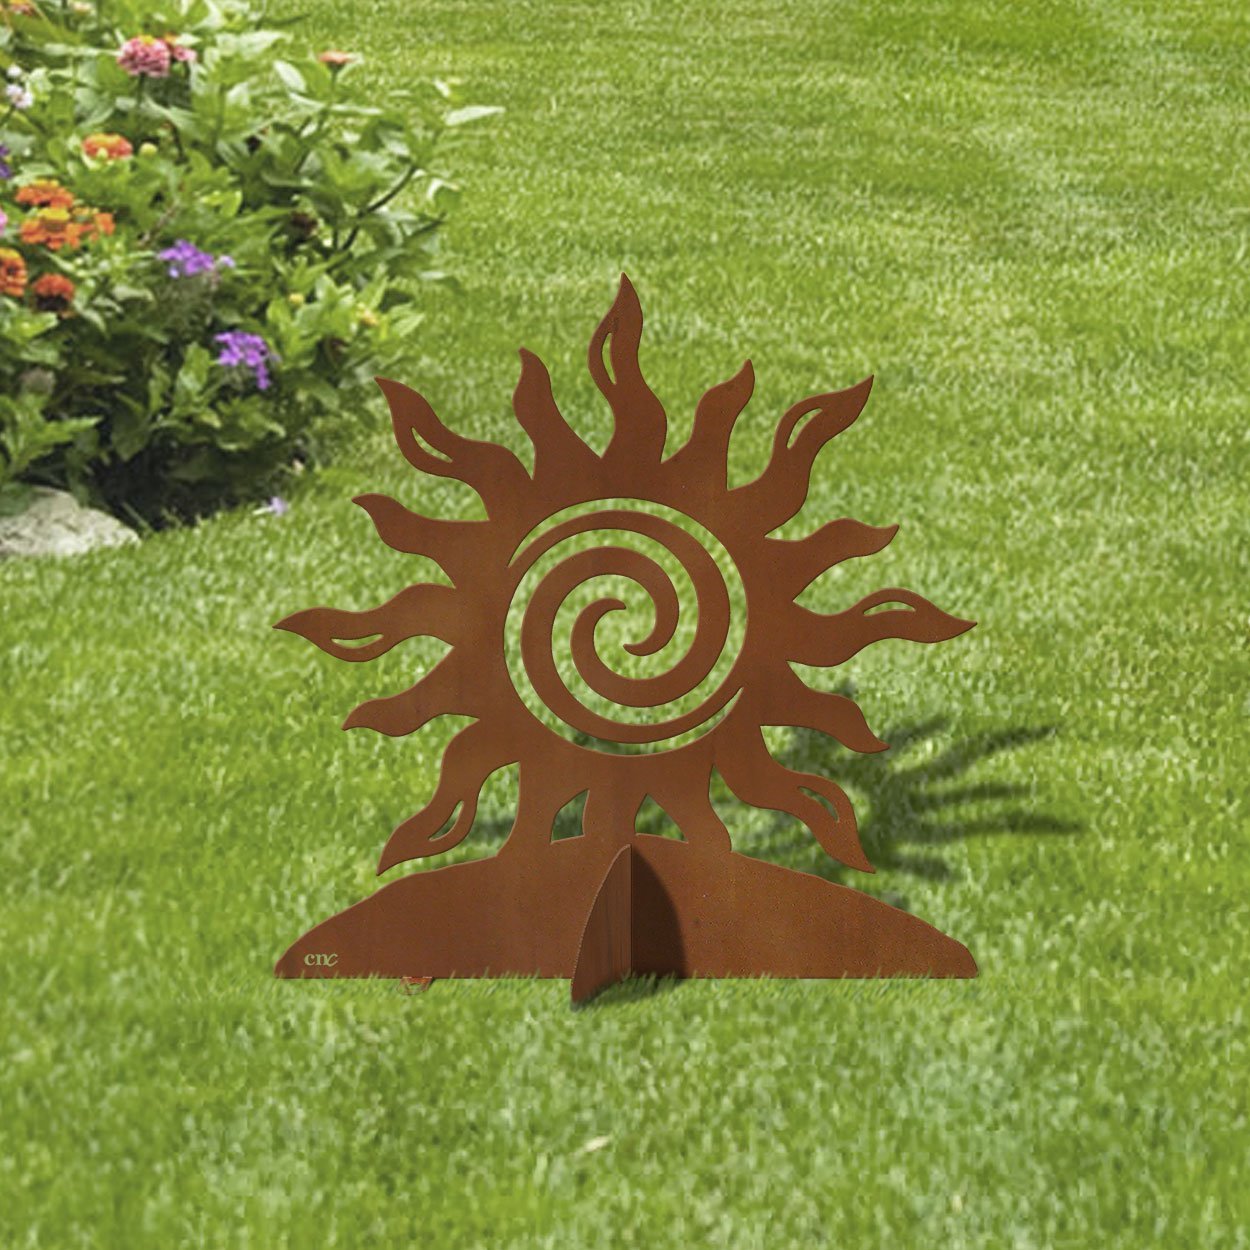 603039 - 24in H Spiral Sun Metal Garden Statue Yard Art